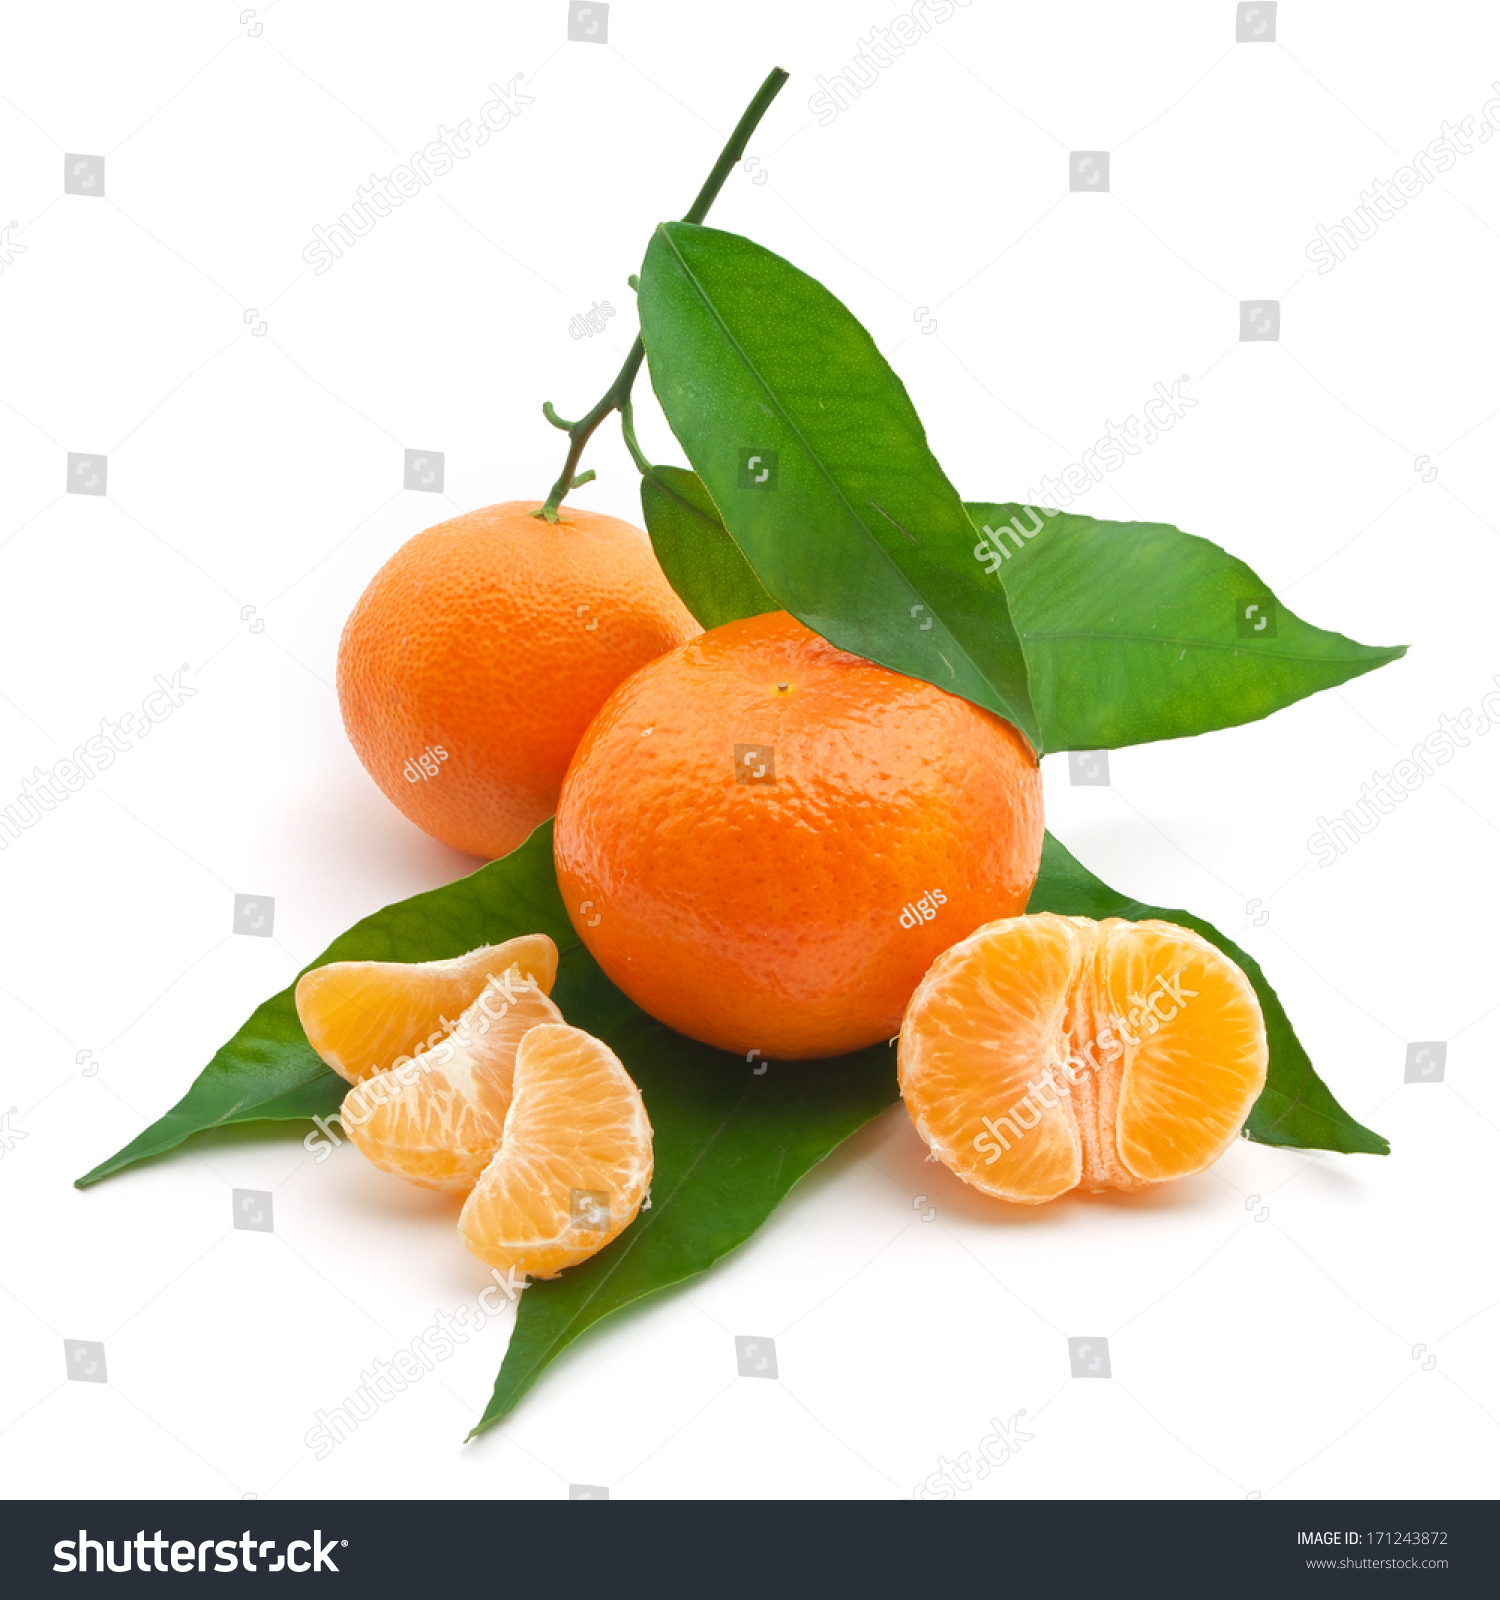 Isolated Tangerine Element Design Stock Photo 171243872 - Shutterstock